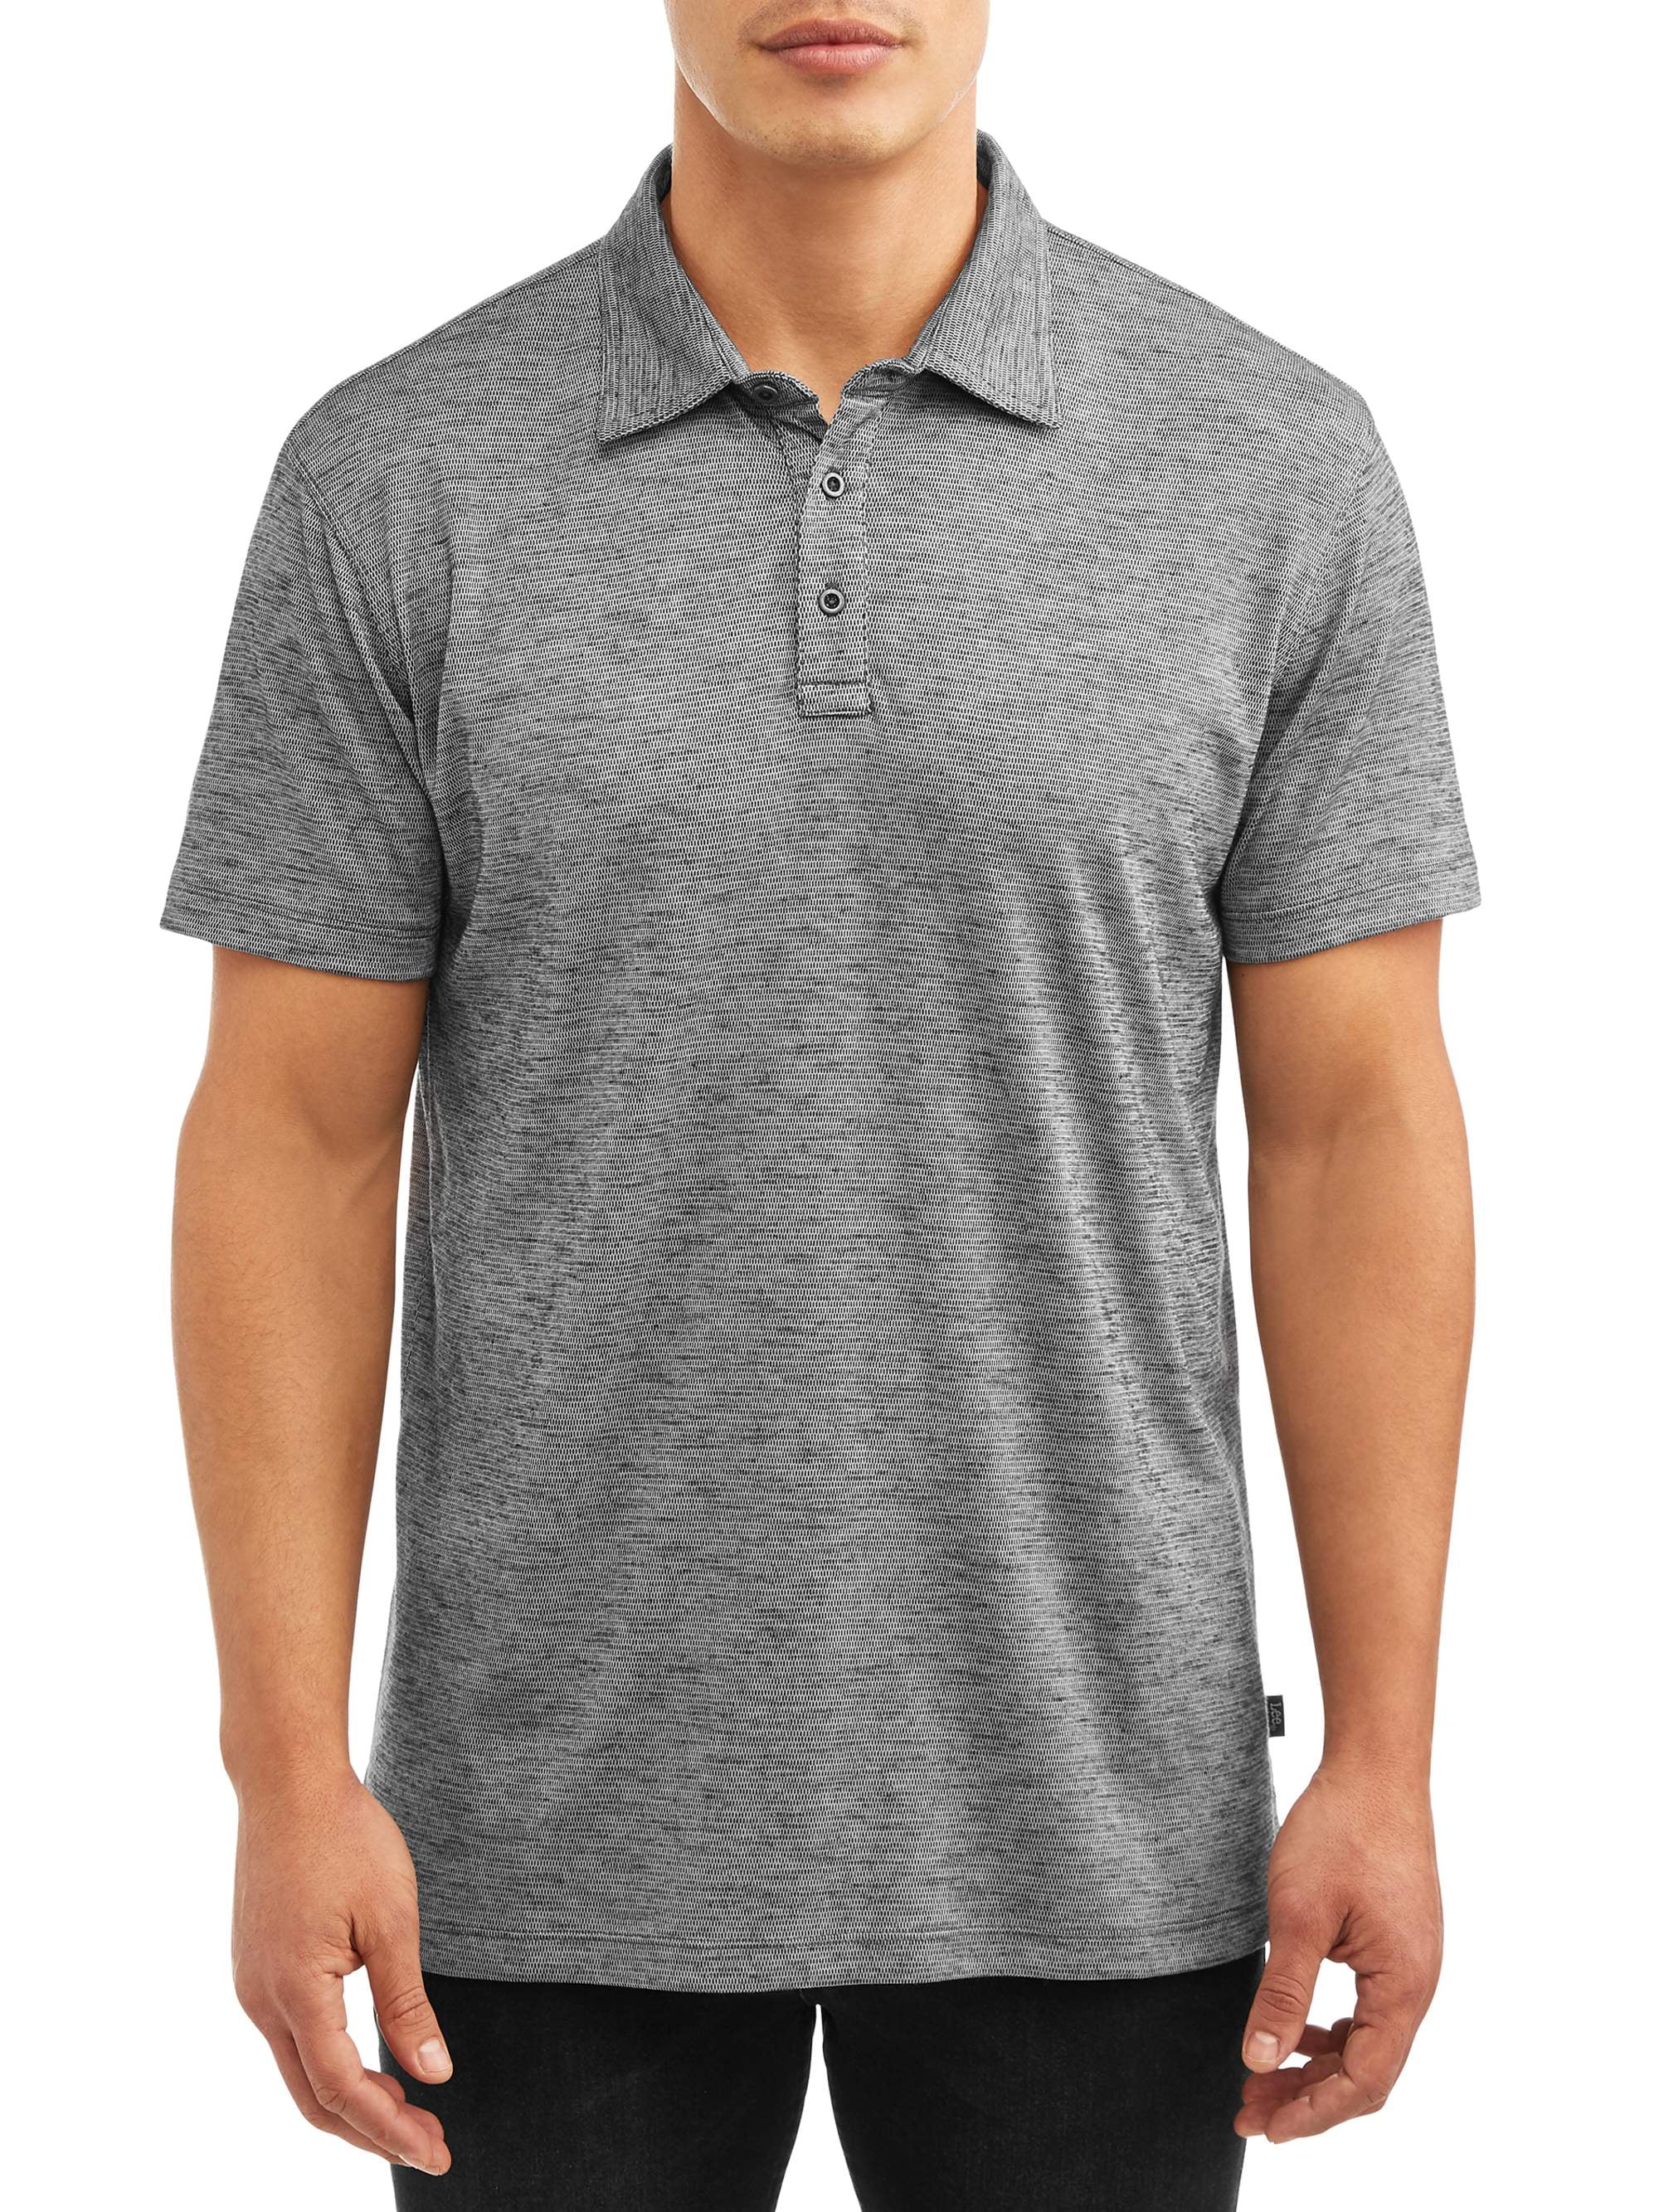 Lee - Lee Men's Short Sleeve Textured Poly Polo Shirt - Walmart.com ...